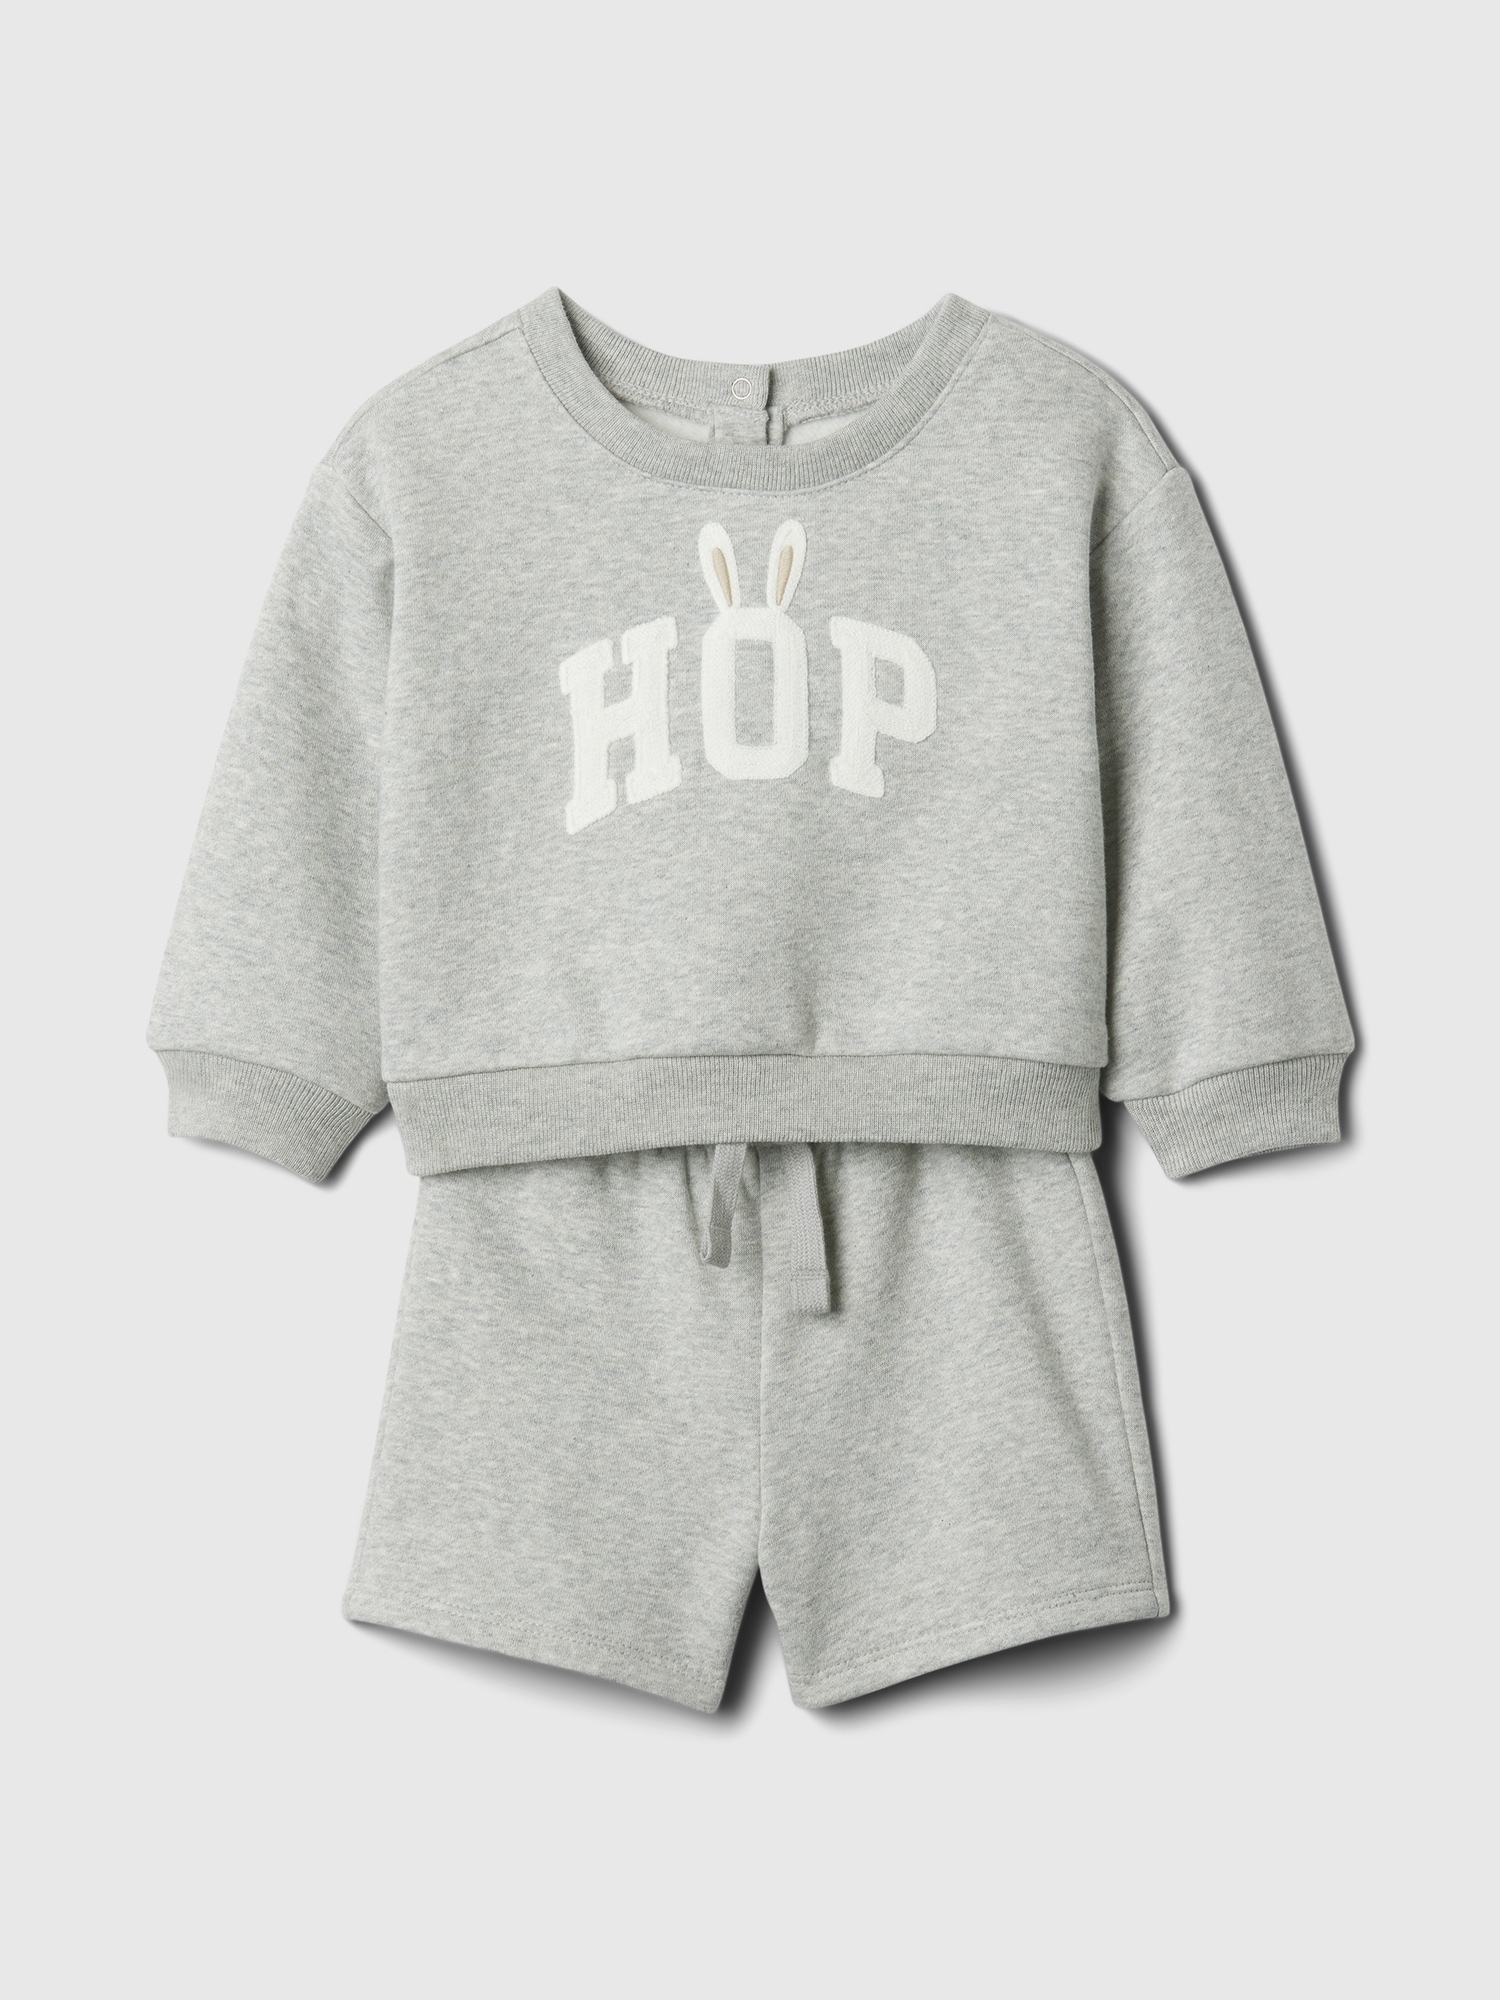 Baby Sweatshirt Outfit Set